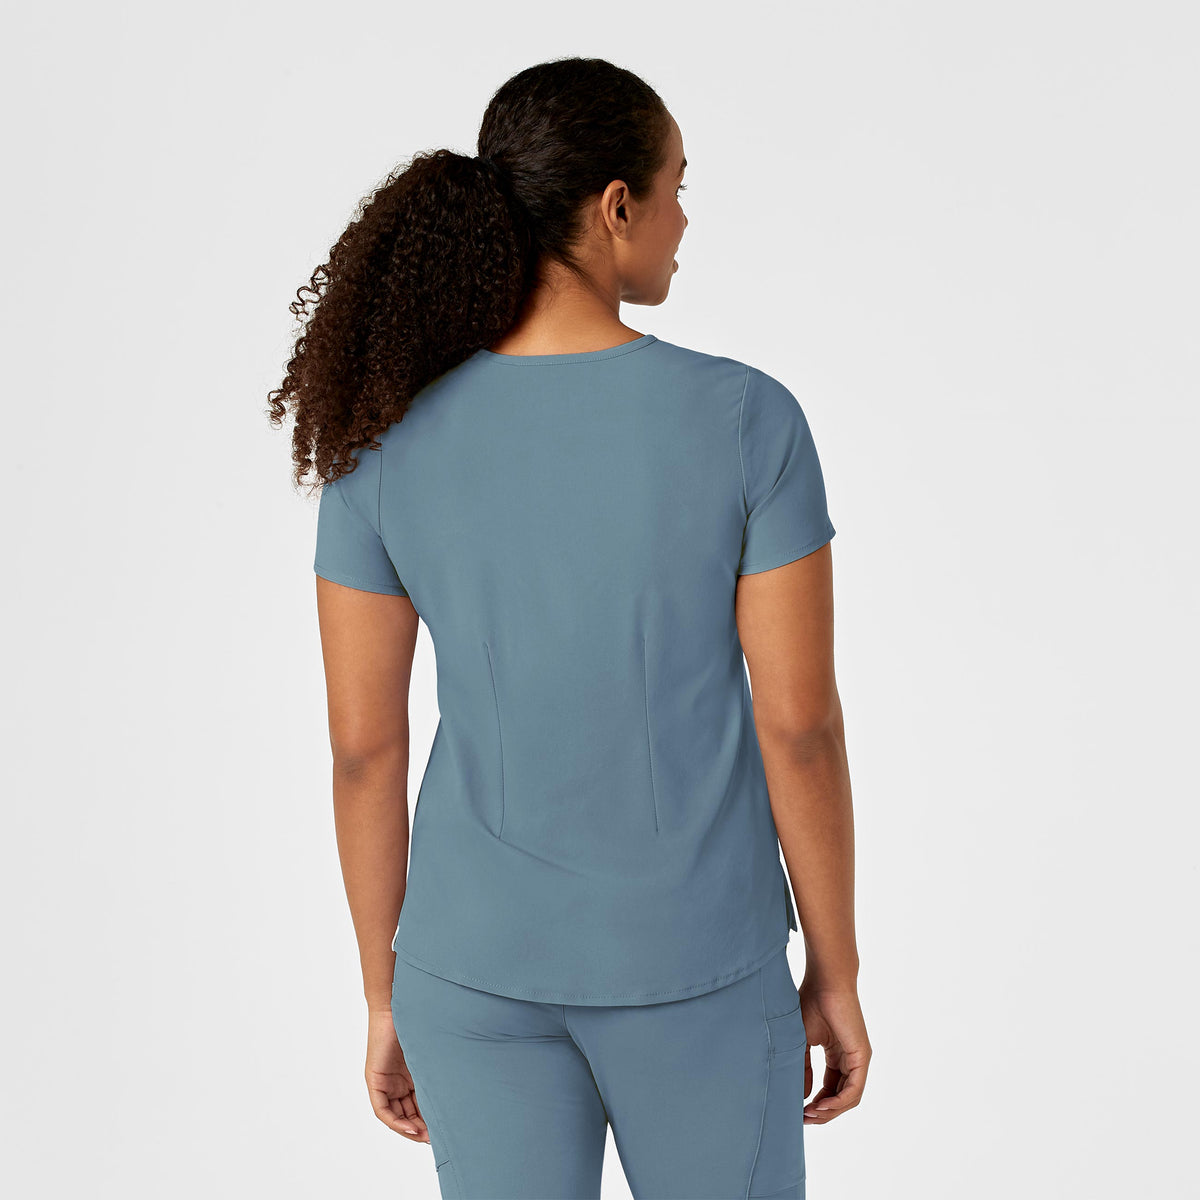 RENEW Women's Mandarin Collar Tuck-In Scrub Top Elemental Blue back view